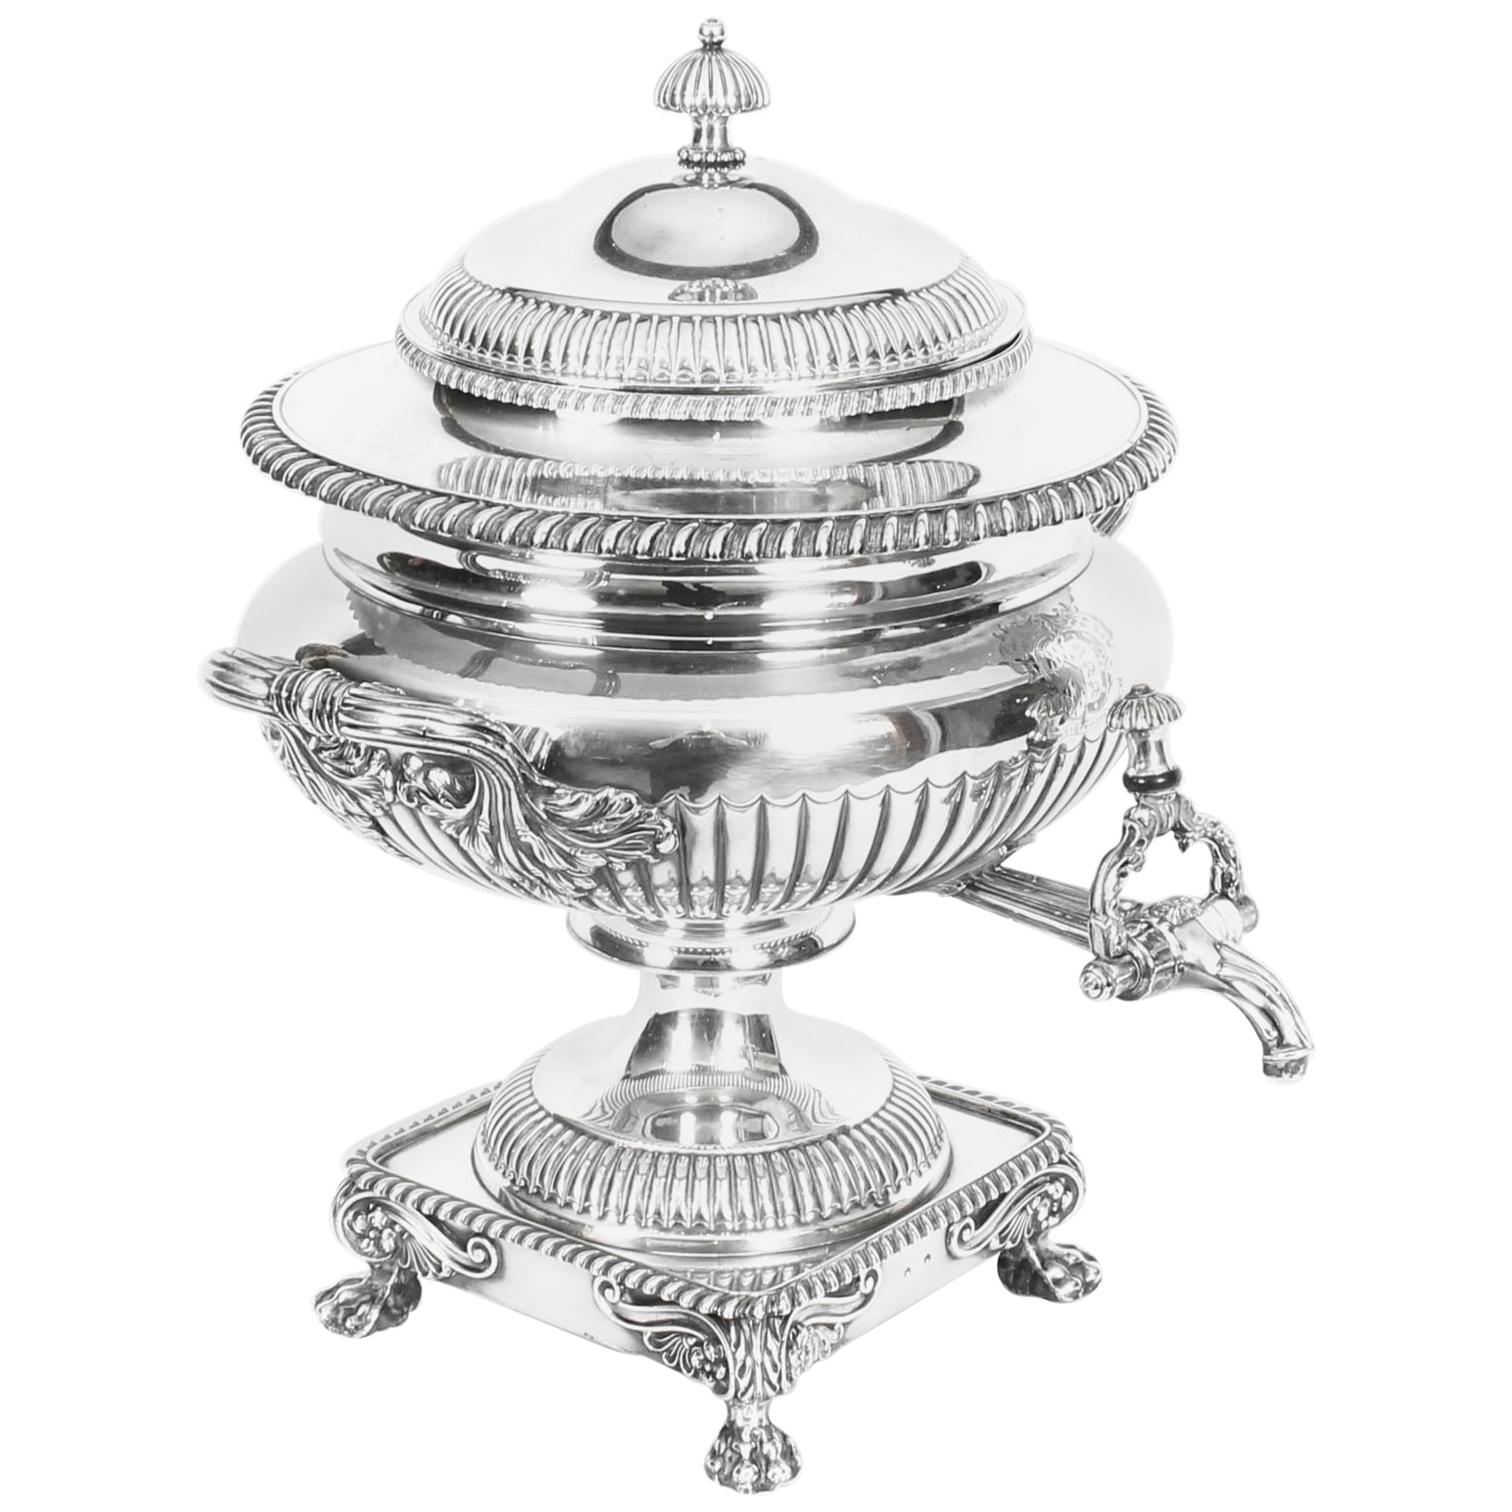 https://a.1stdibscdn.com/antique-regency-old-sheffield-tea-urn-samovar-matthew-boulton-19th-century-for-sale/1121189/f_204935821599666150992/20493582_master.jpg